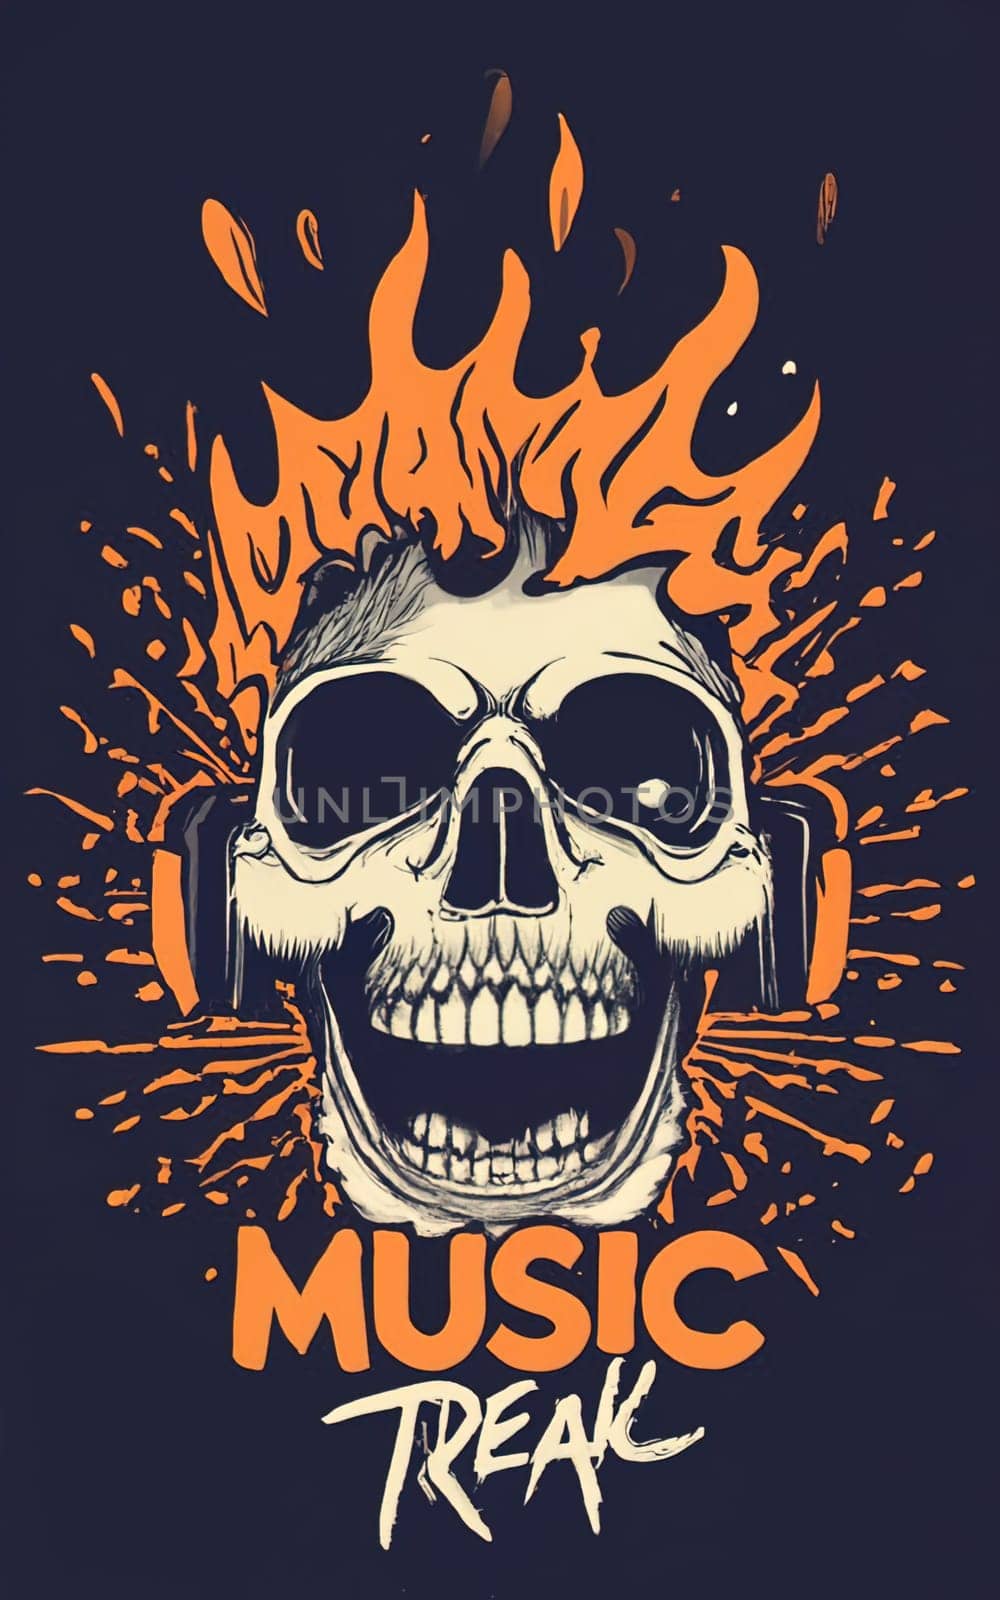 Terrifying Skull with Soul Emerging, 'Music Freak' Text - T-Shirt Illustration on Dark Background by igor010